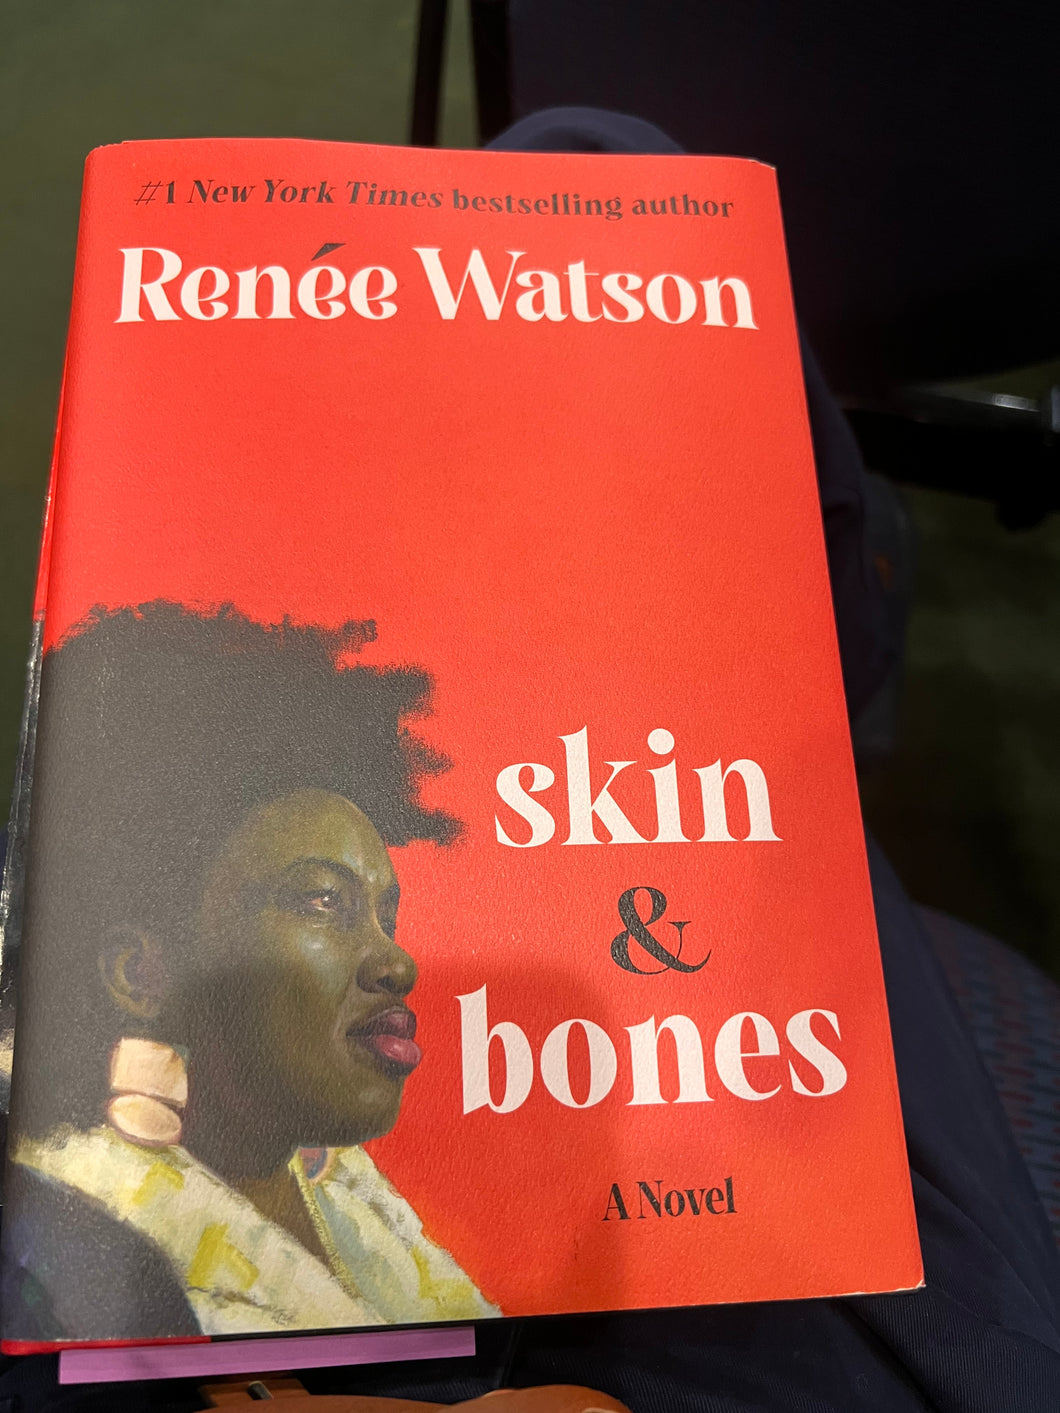 skin & bones
a novel | Reneè Watson